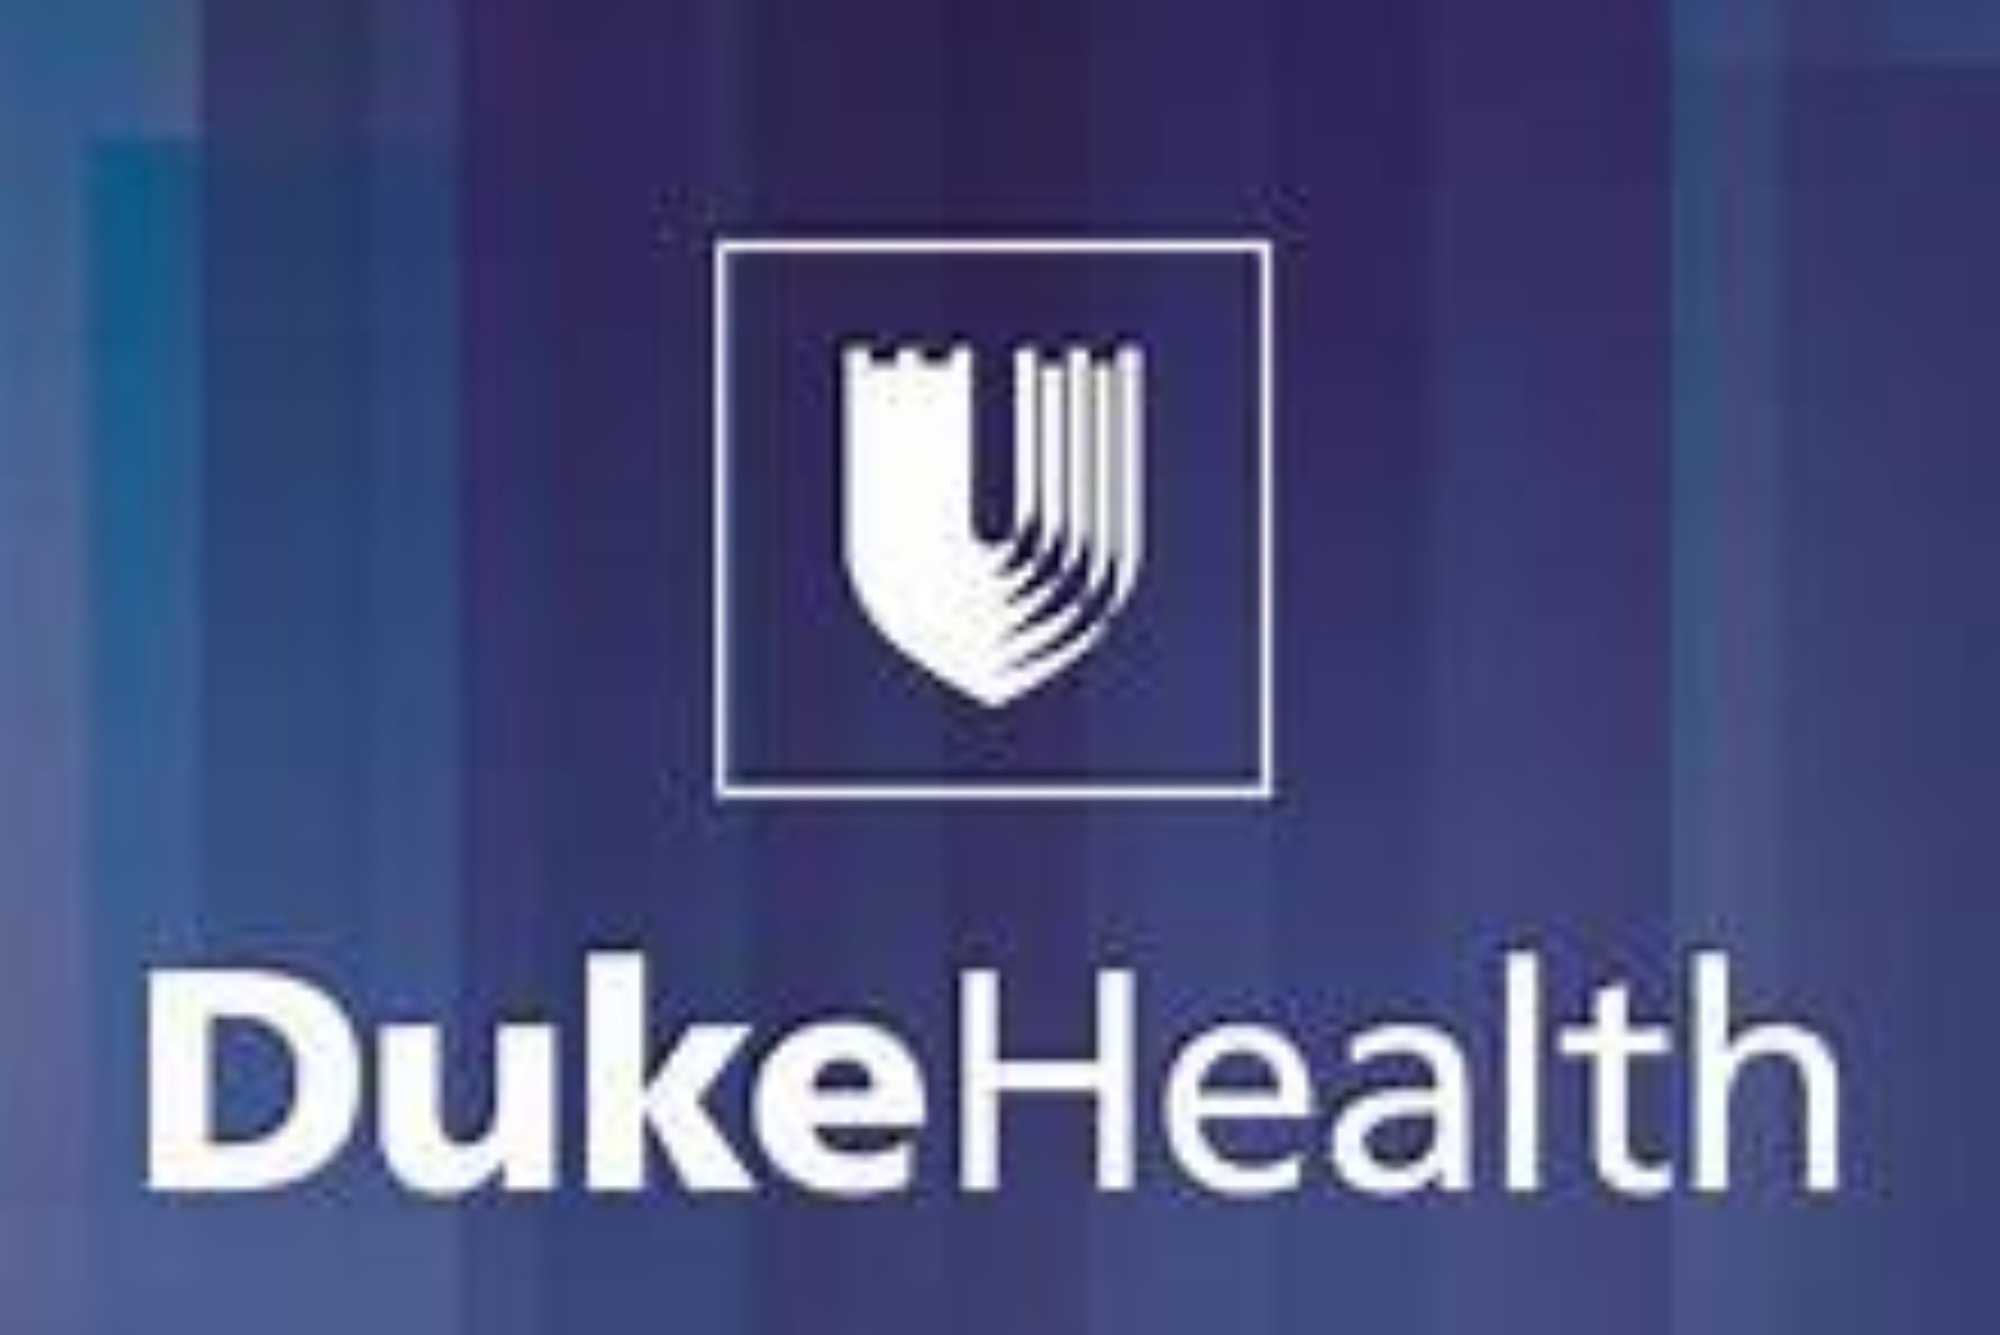 Duke Street Health and Medical Centre